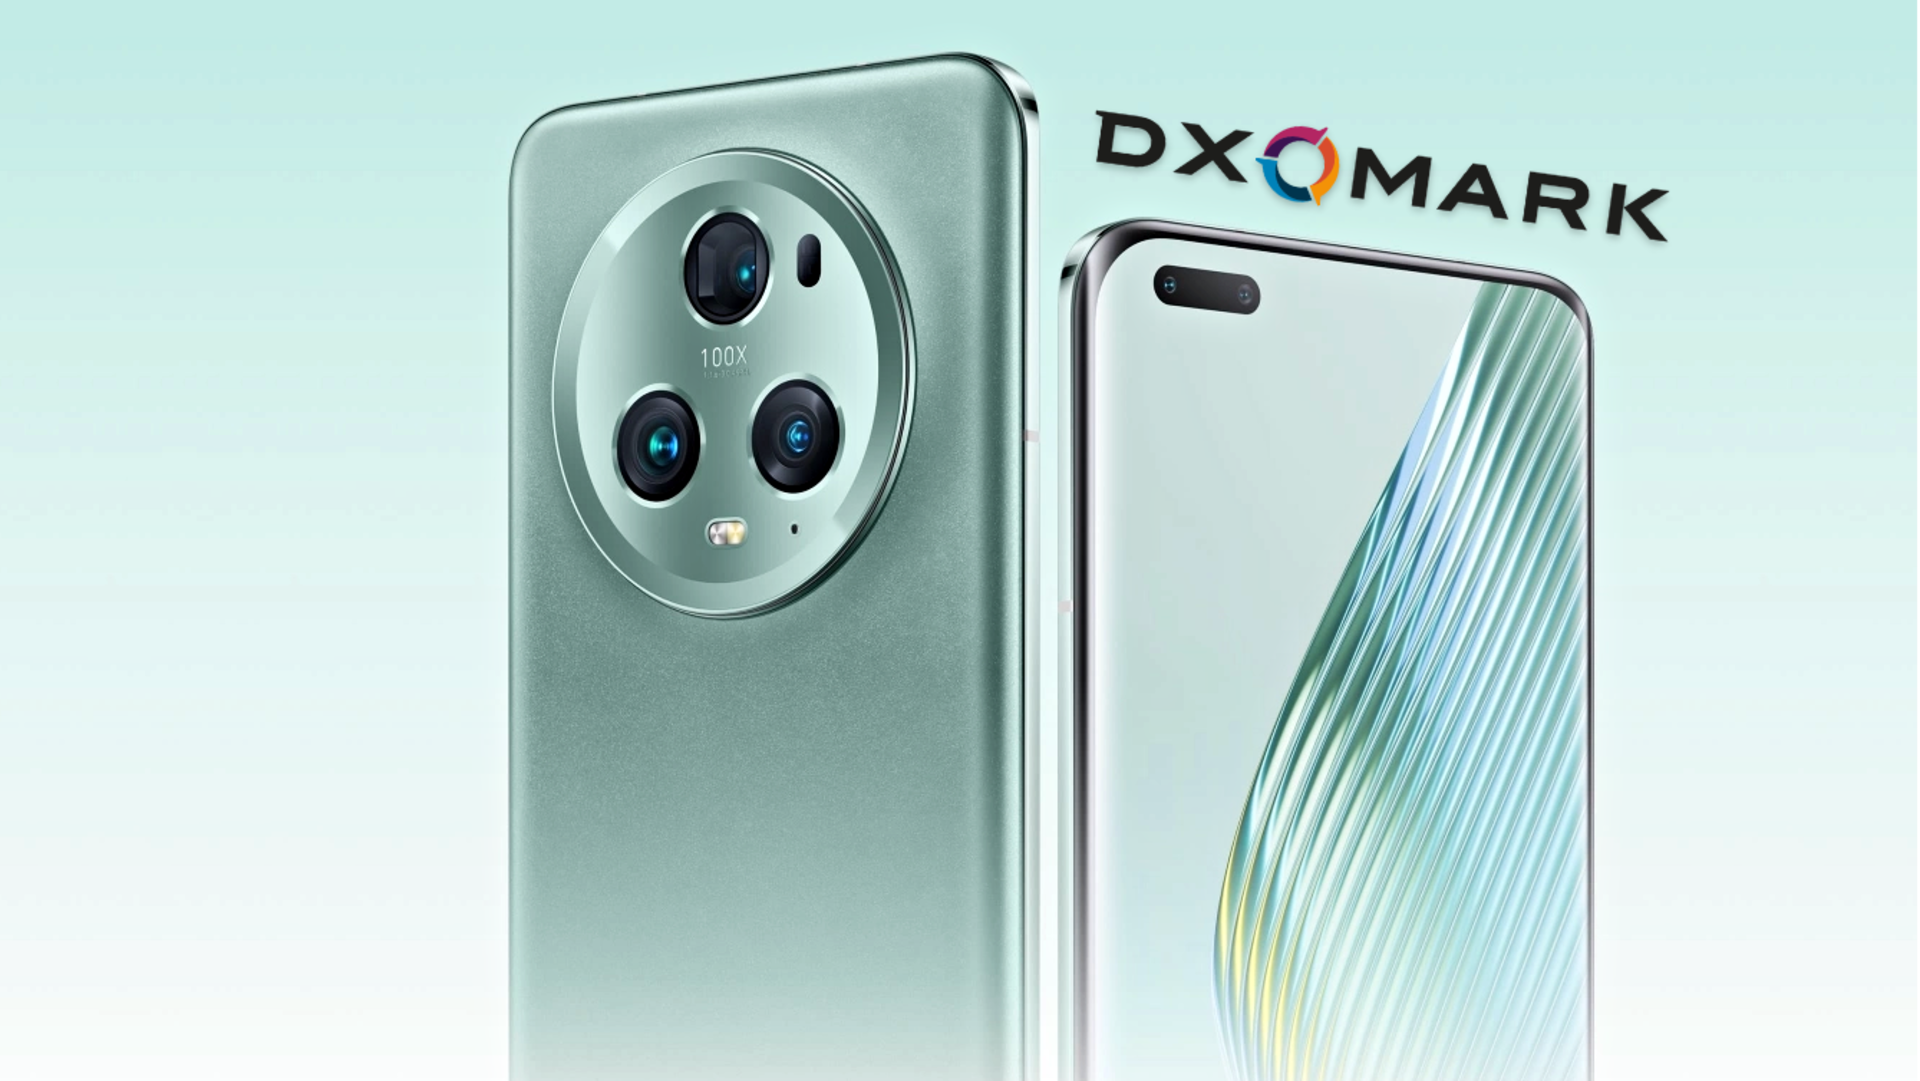 5 smartphones with best displays as per DXOMARK ratings